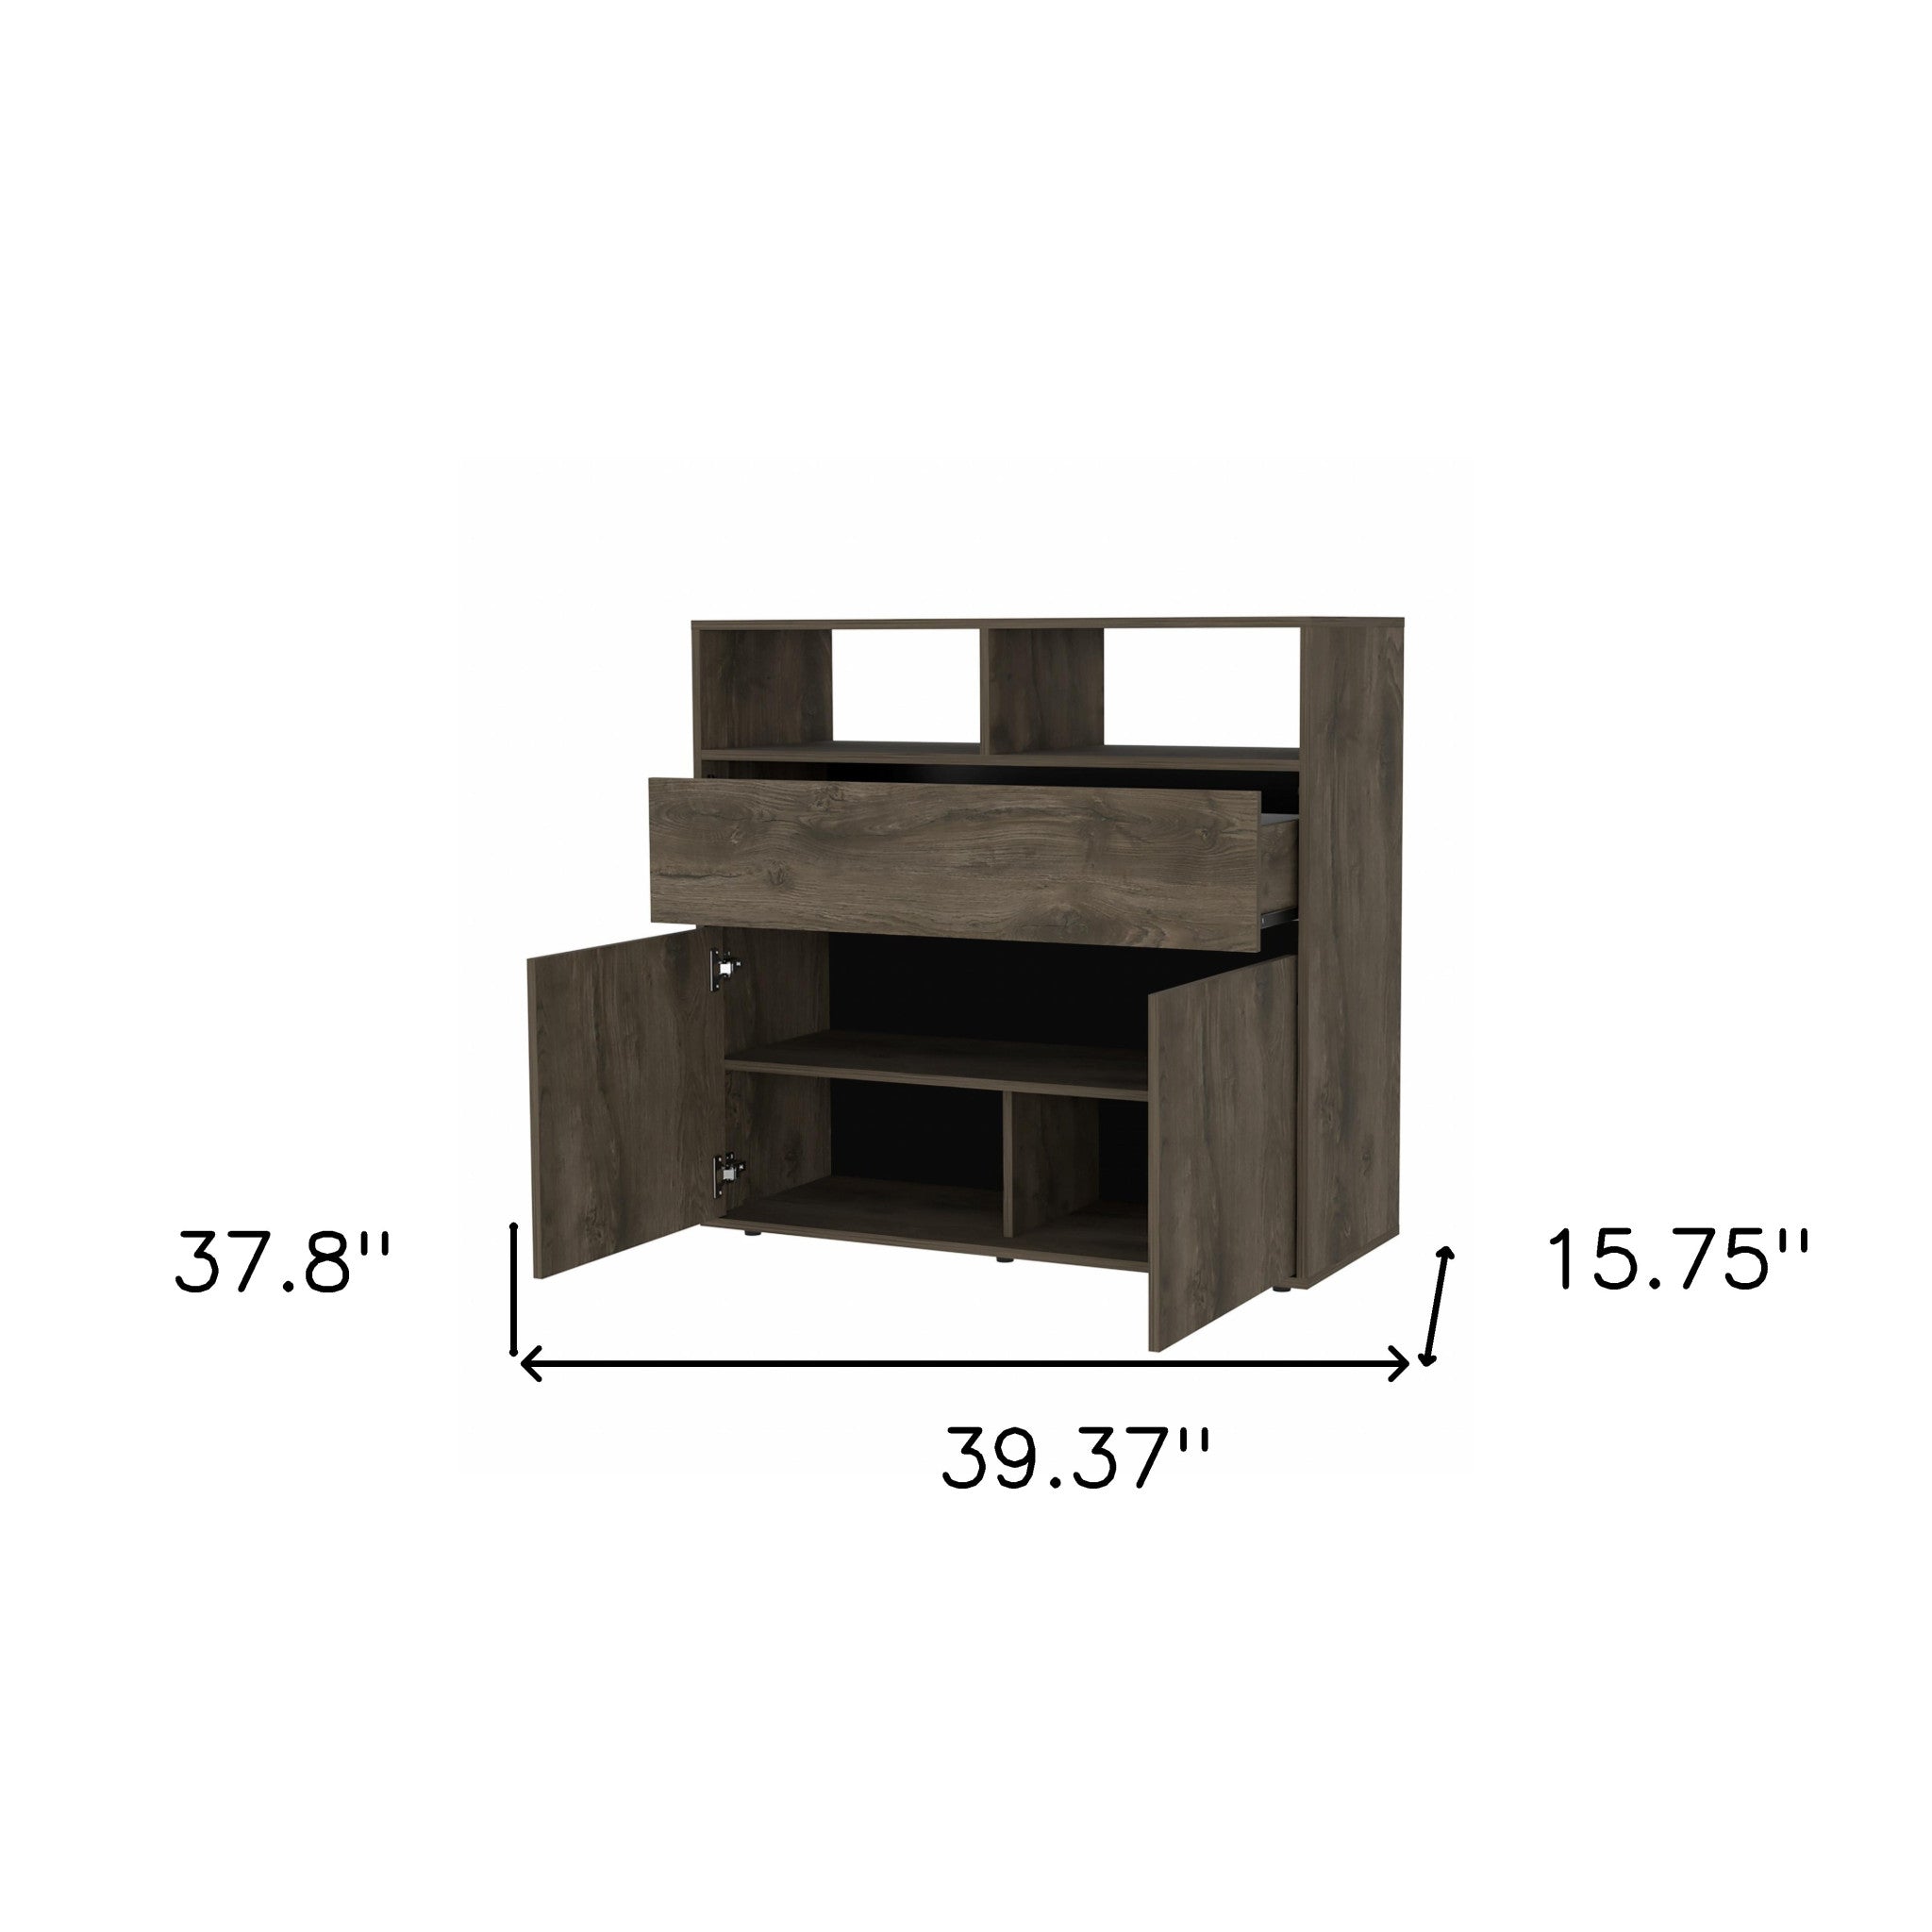 39" Dark Brown Manufactured Wood Drawer Combo Dresser